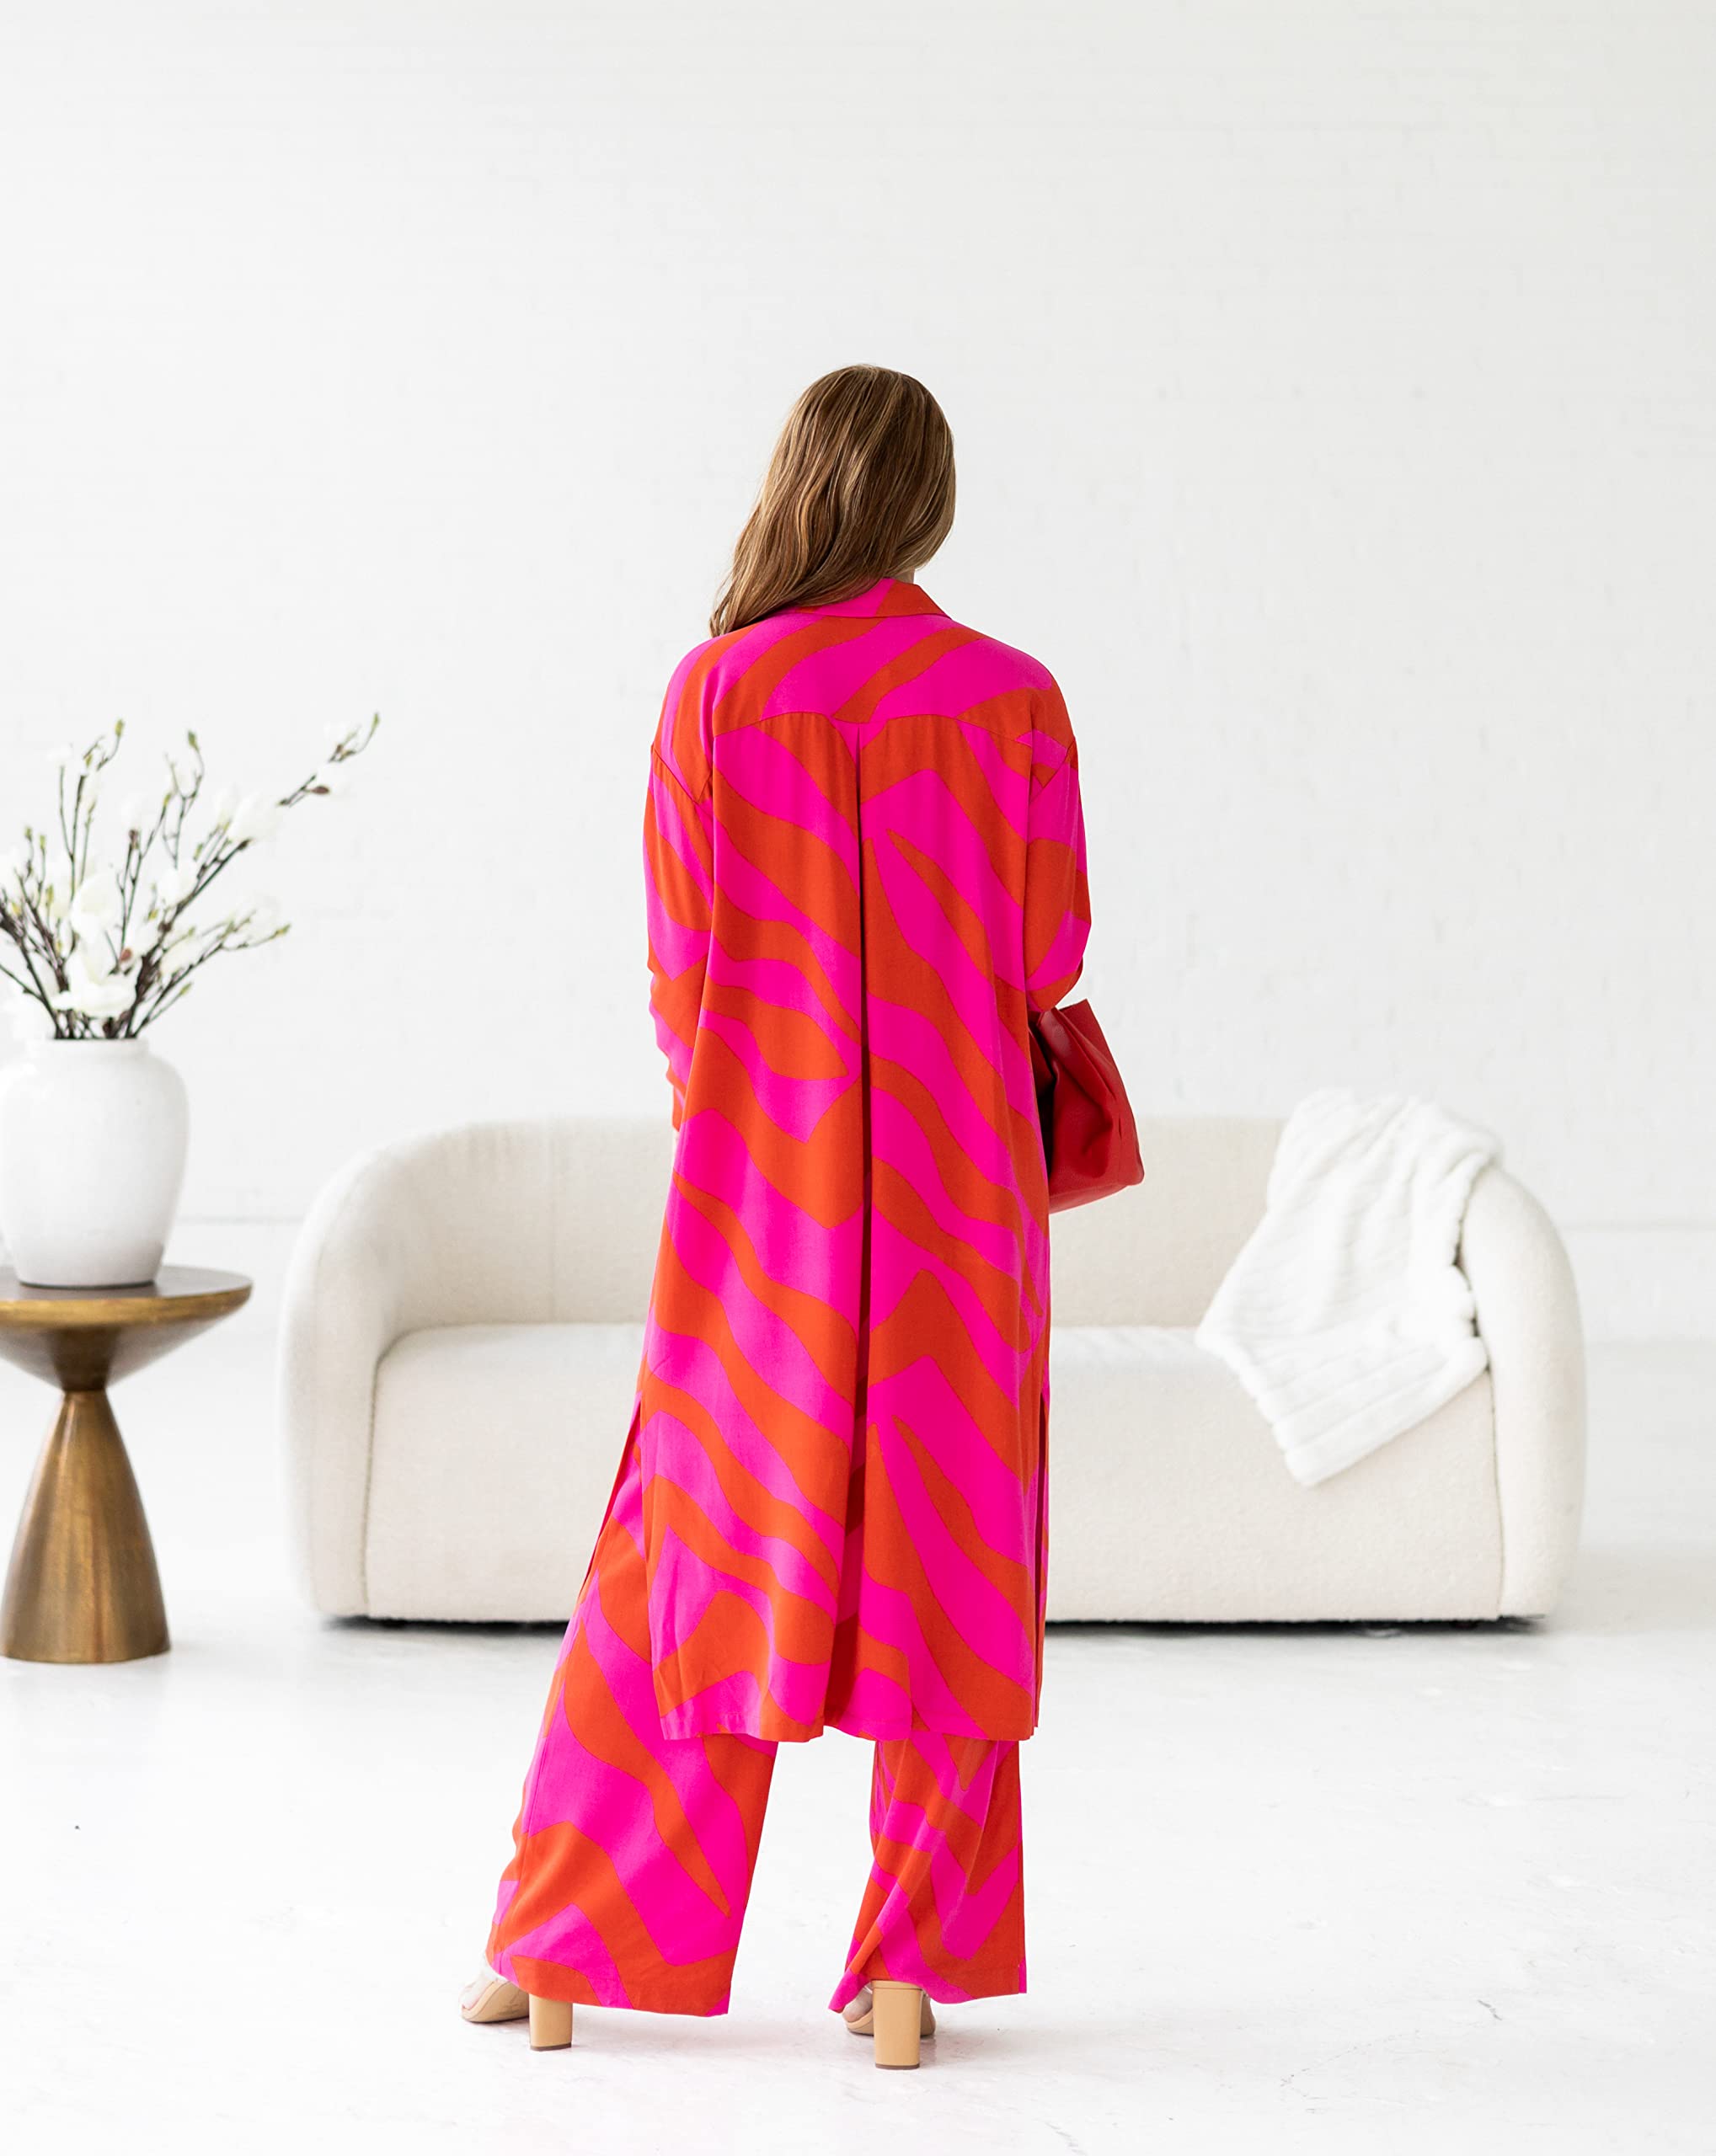 The Drop Women's Pink/Red Zebra Print Shirtdress by @victoriouslogan